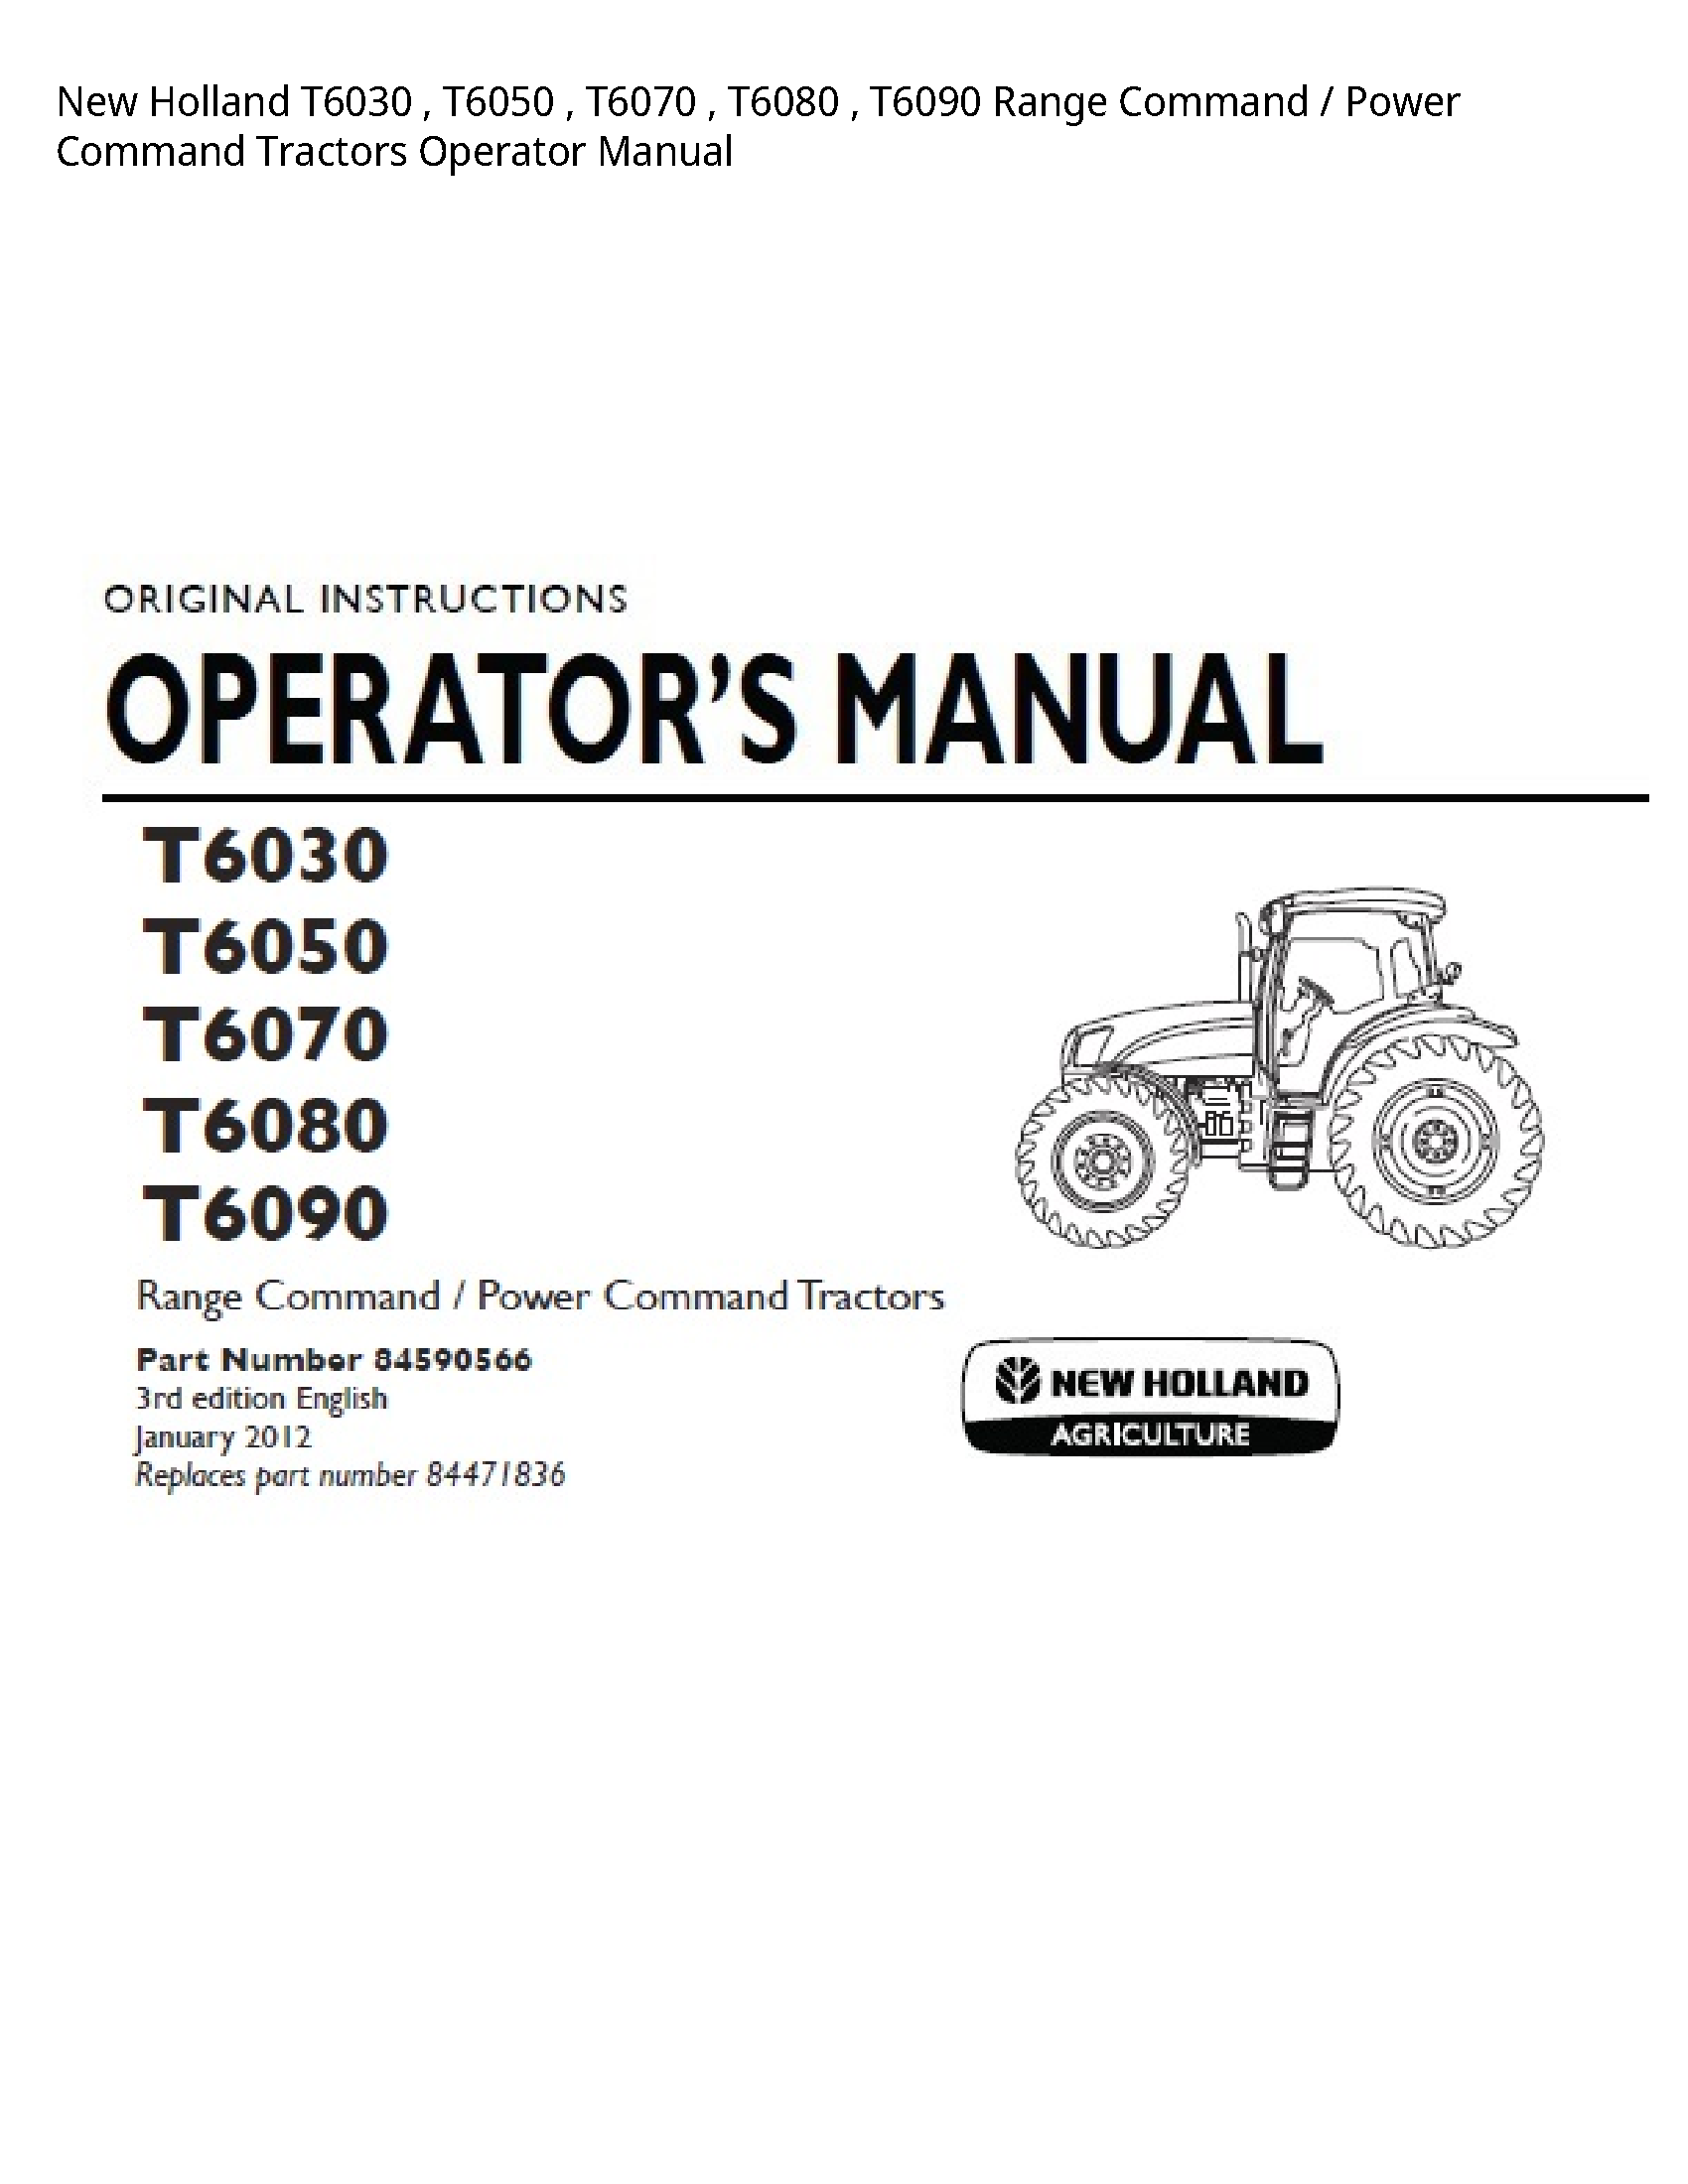 New Holland T6030 Range Command Power Command Tractors Operator manual